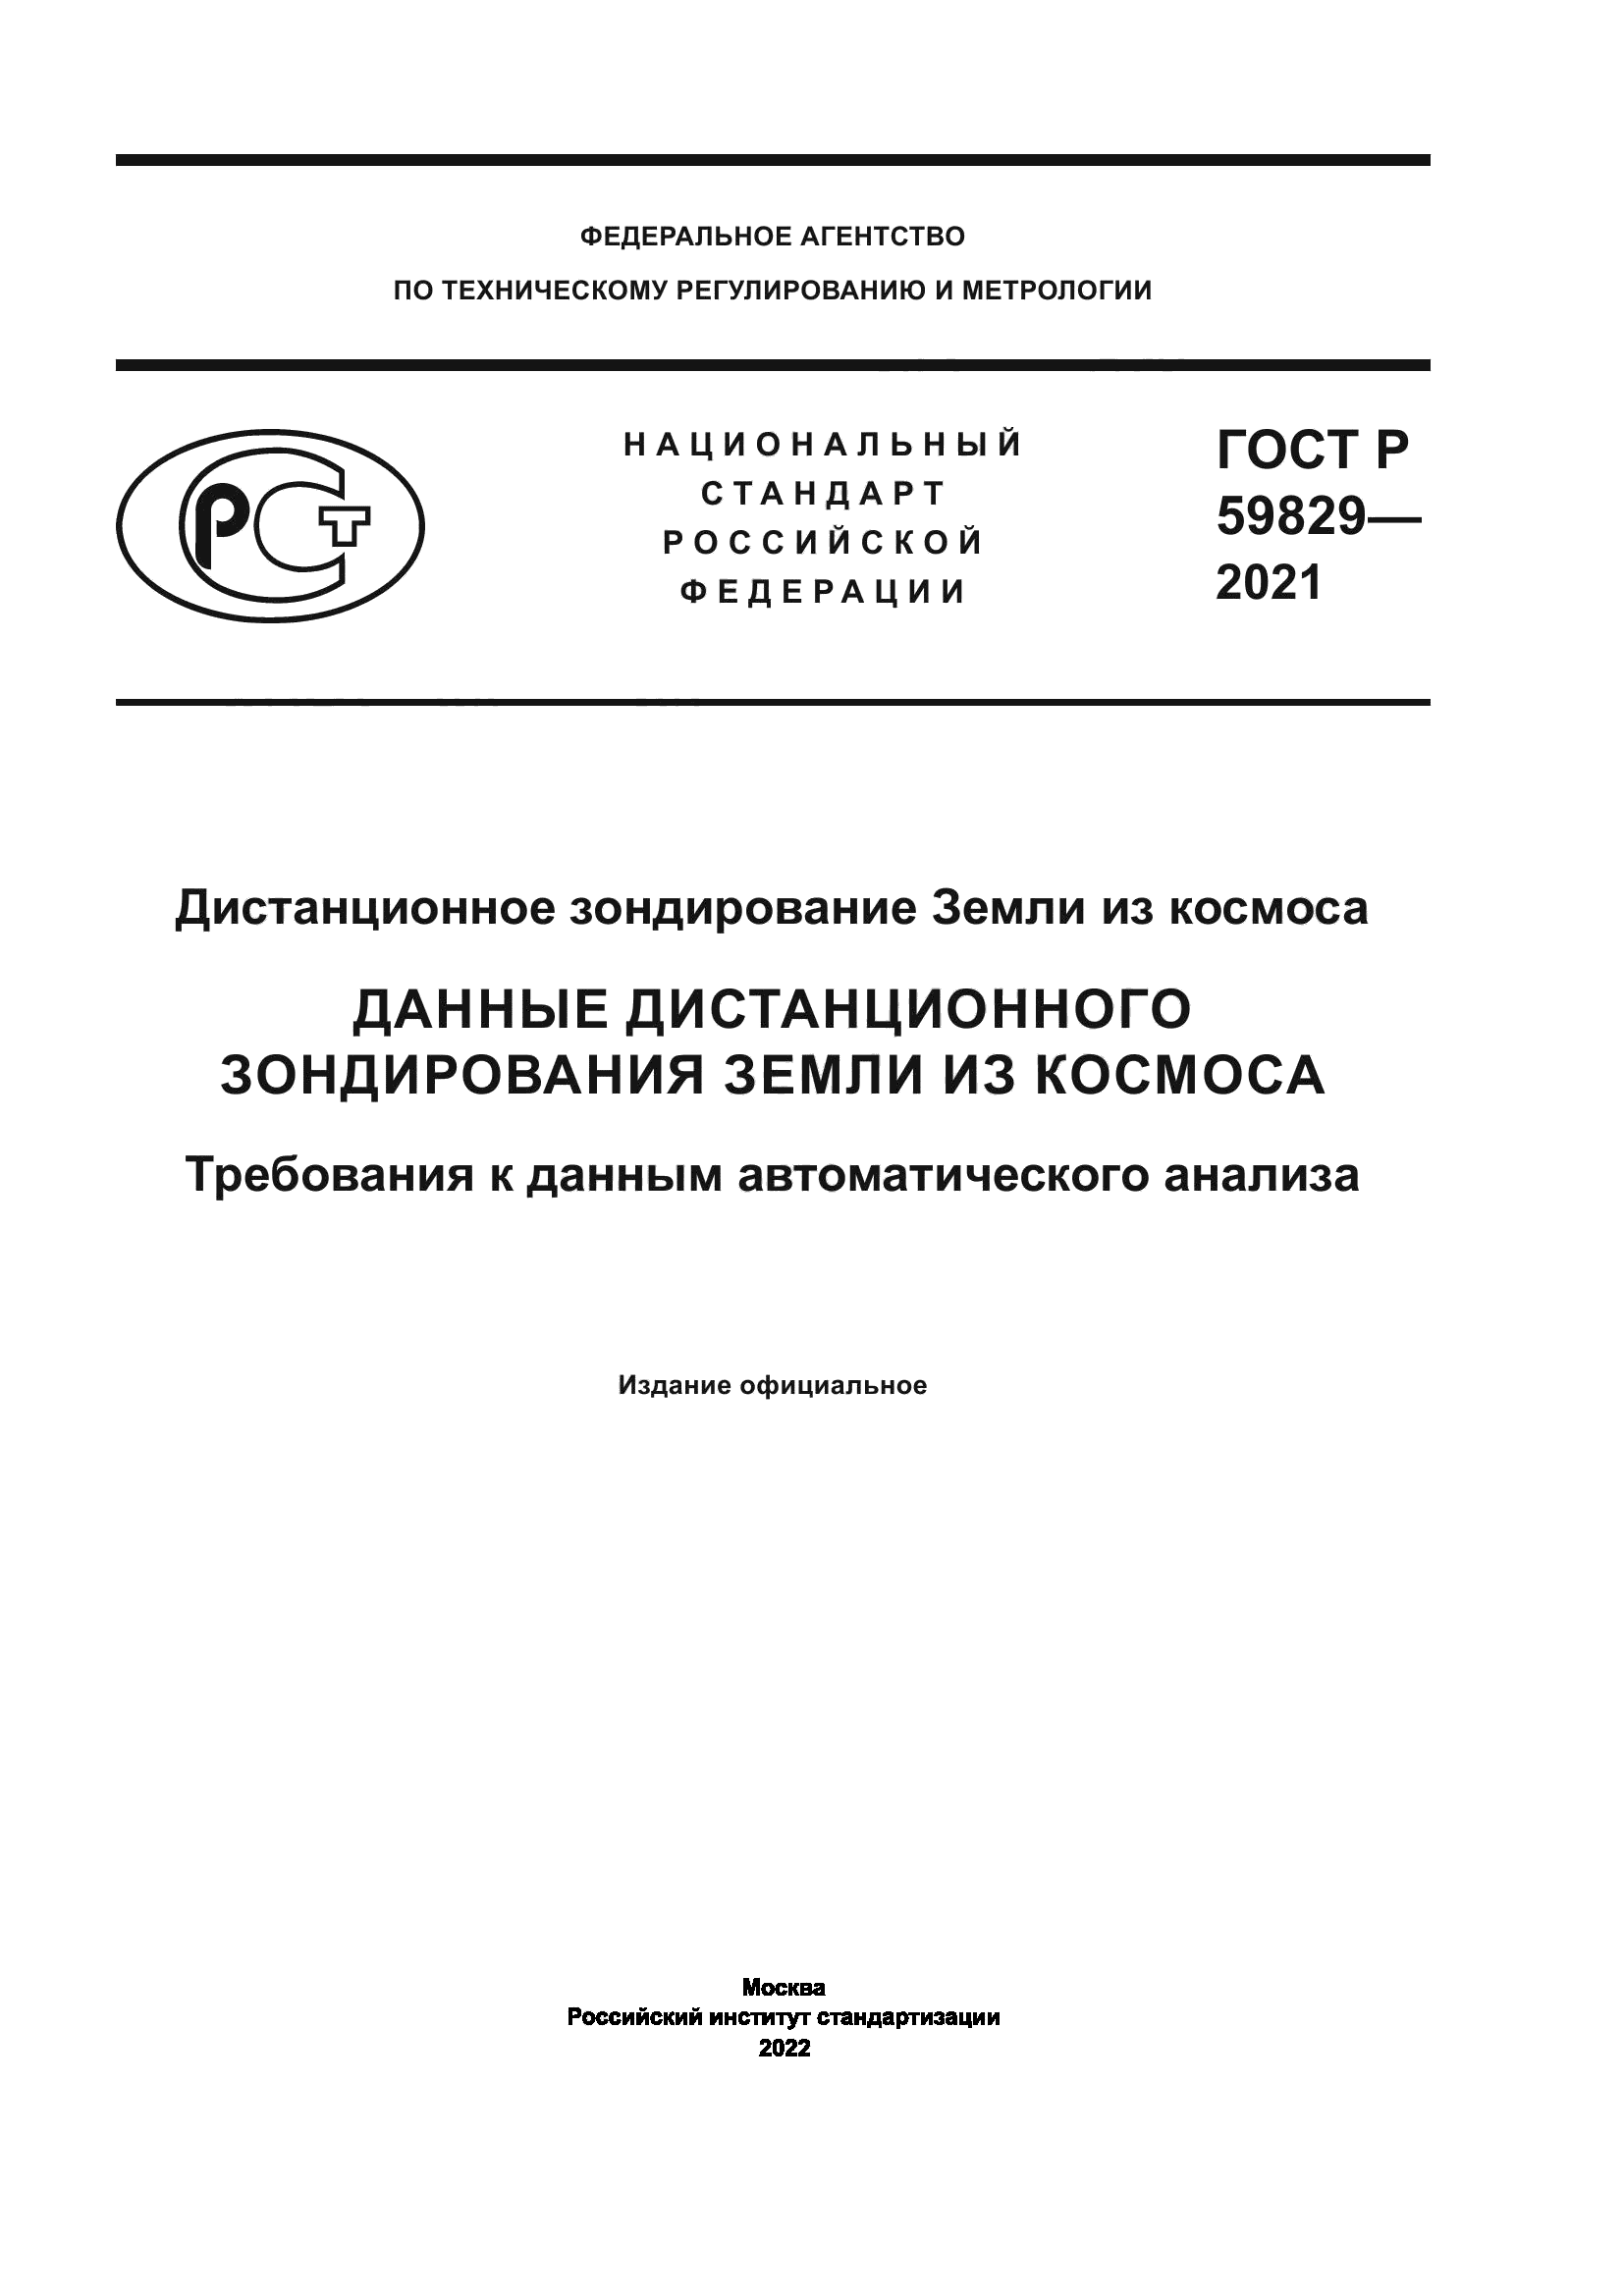 ГОСТ Р 59829-2021